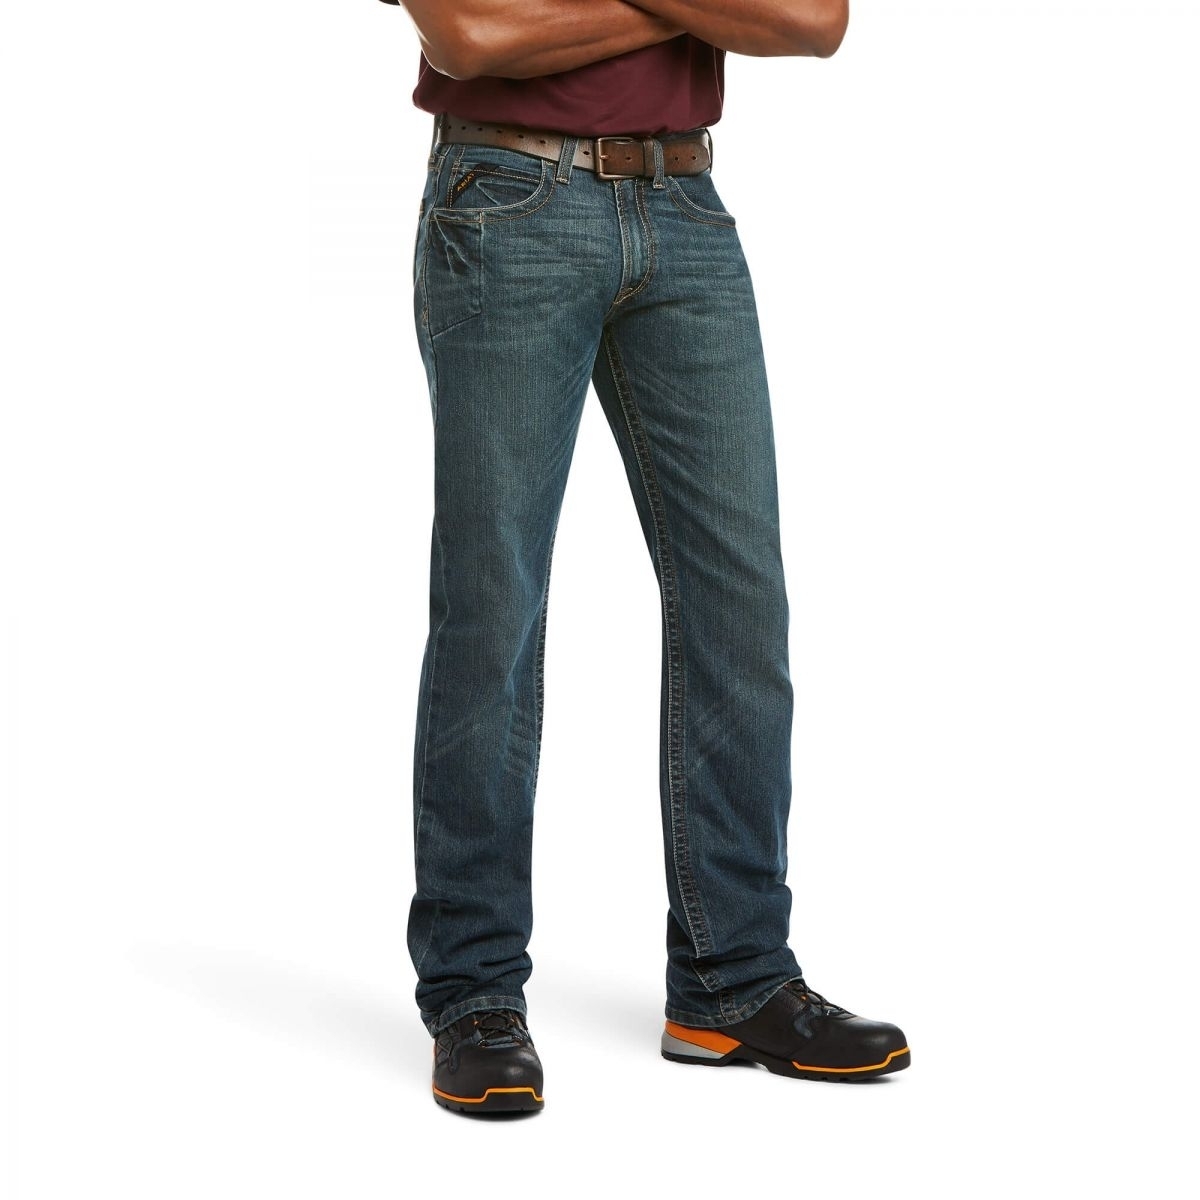 Ariat Rebar M4 Slim Fit Durastretch Straight Leg Jean - Work Jeans for Men - image 1 of 4